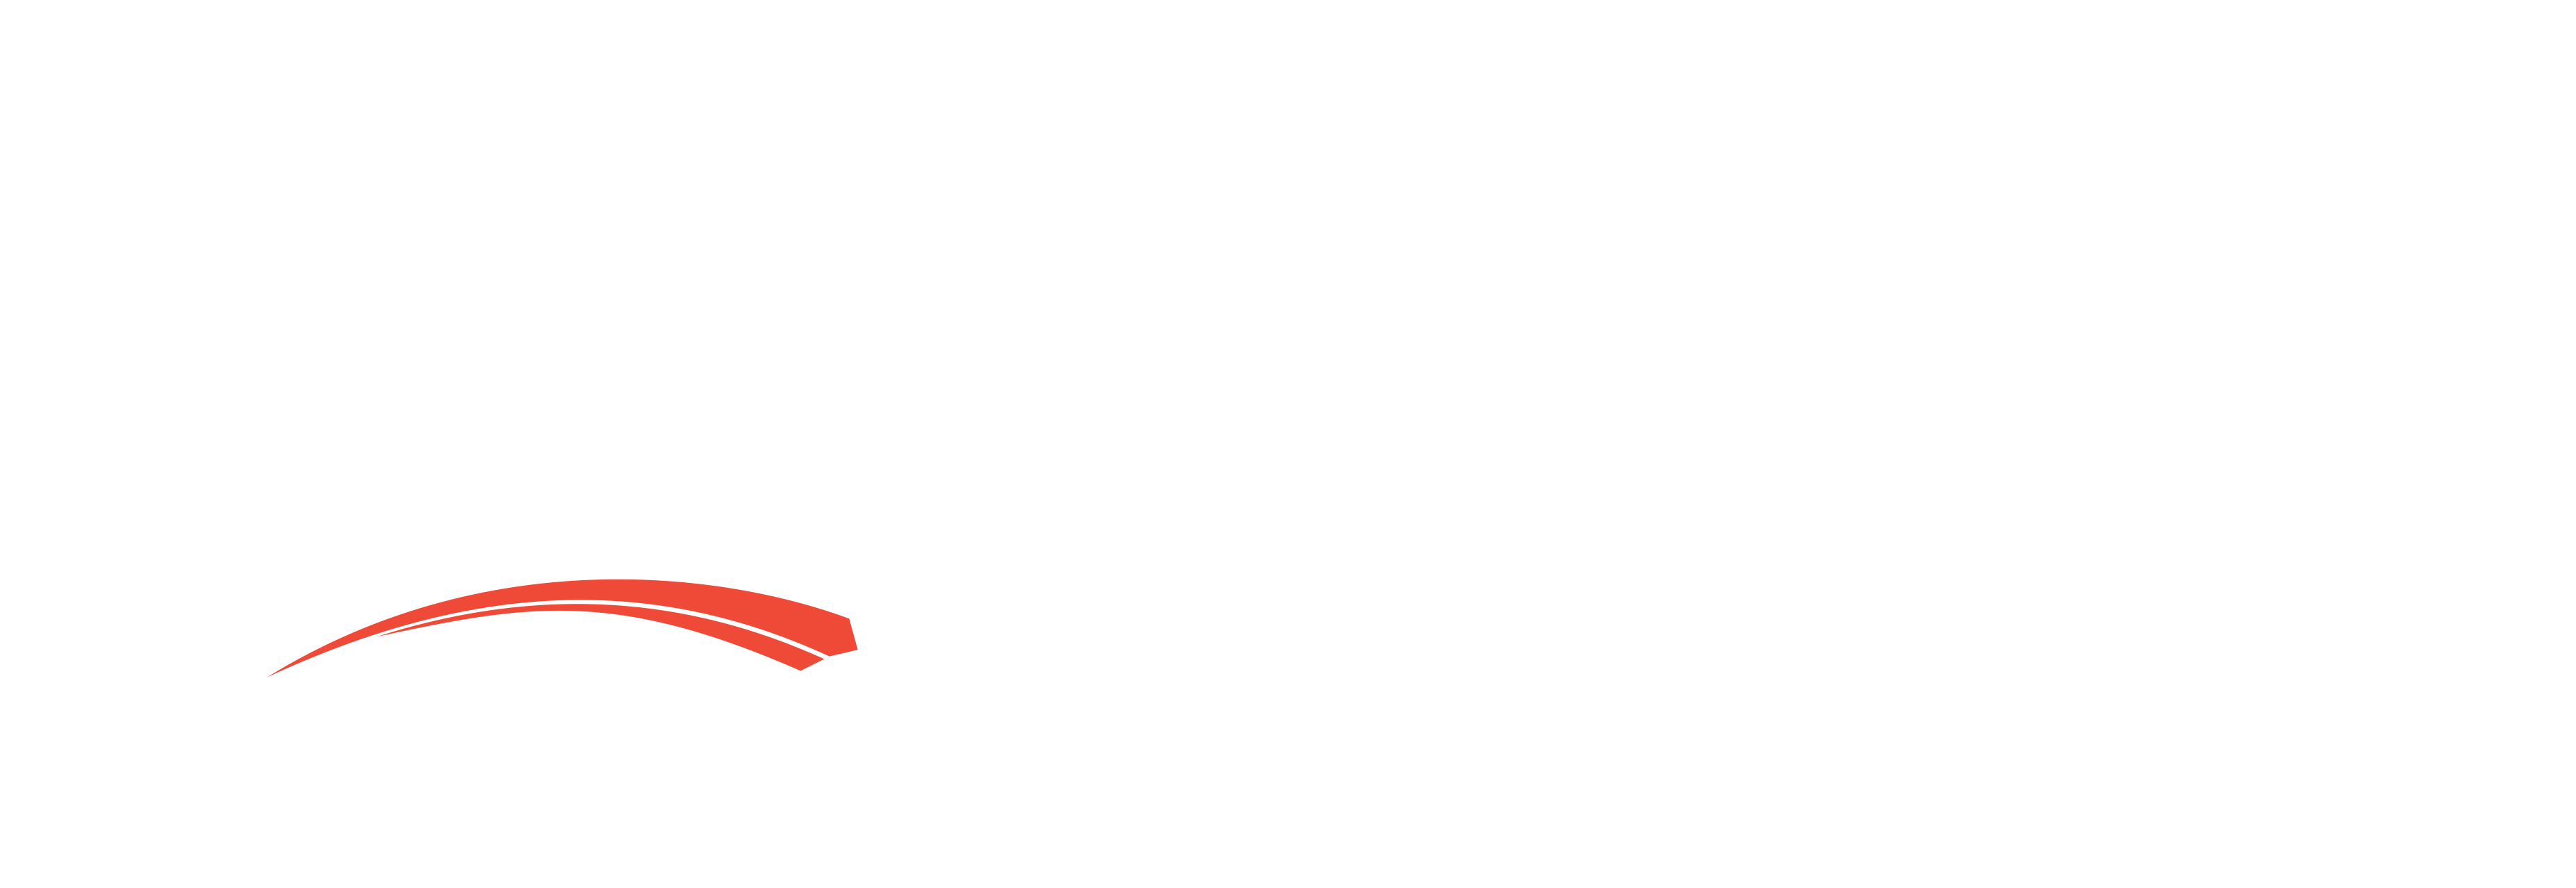 Gateway Ministries International